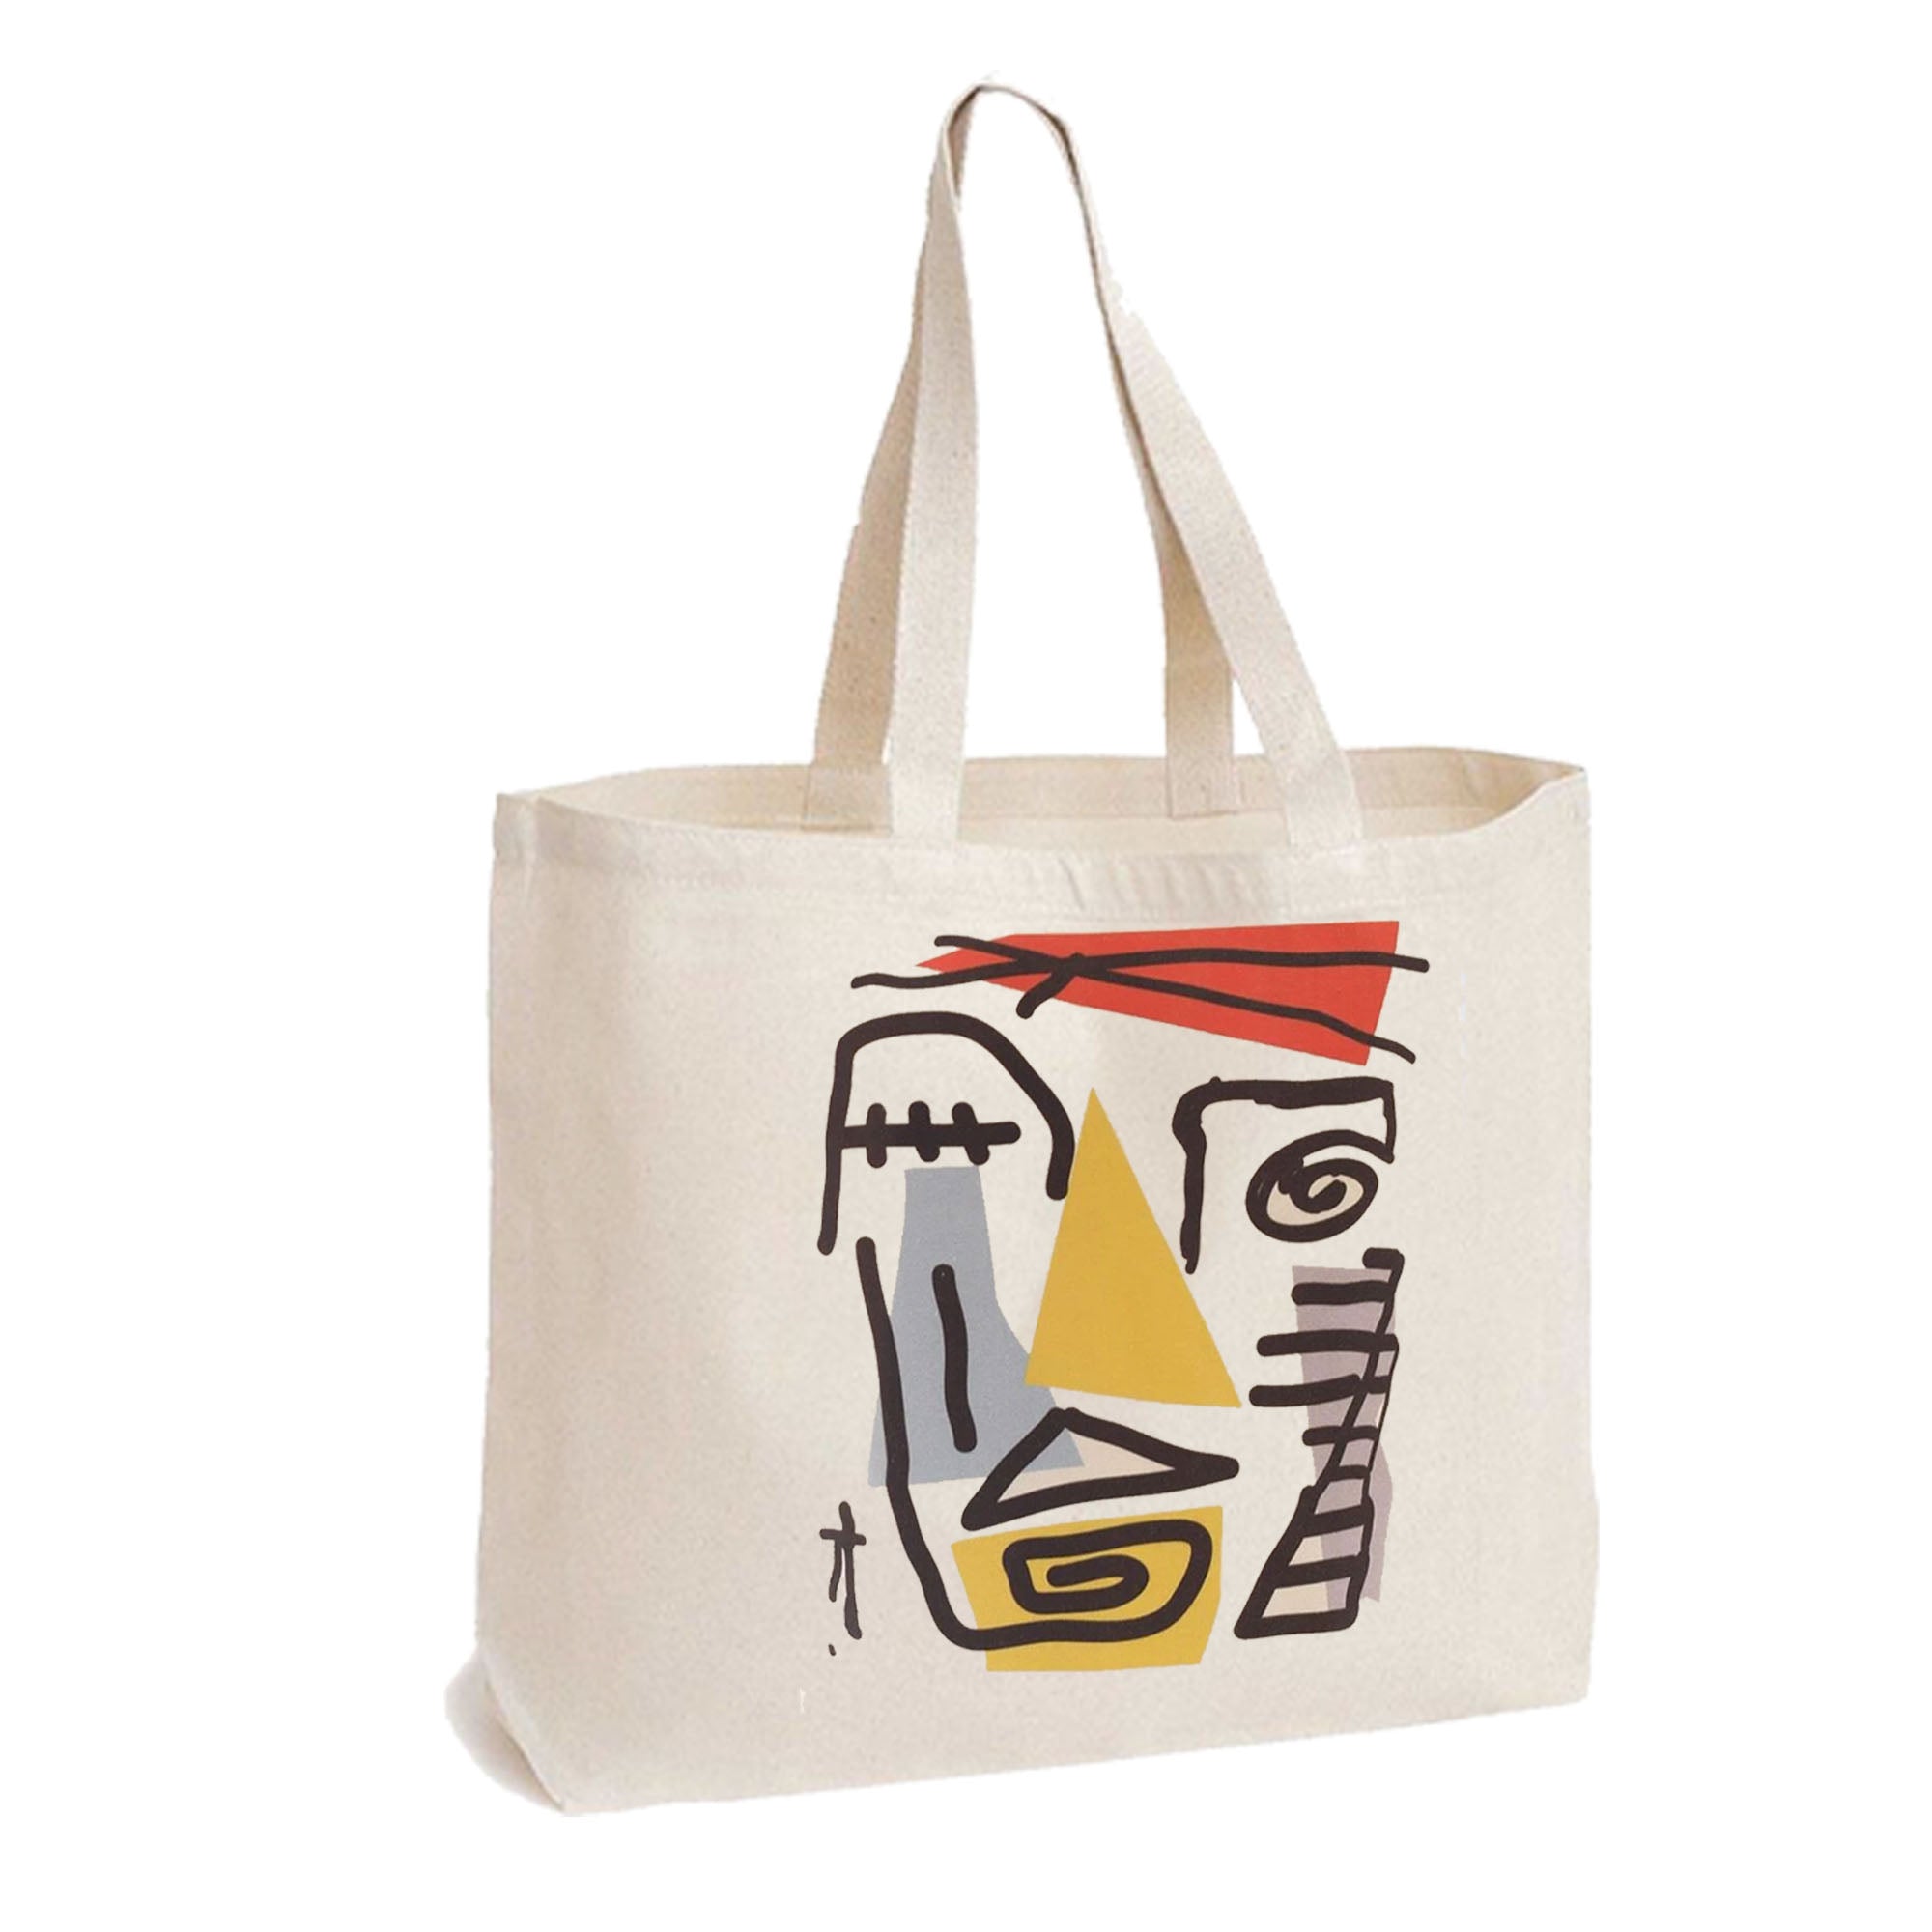 Eco-Friendly Reusable Canvas Shopping Bag - Picasso Style Design